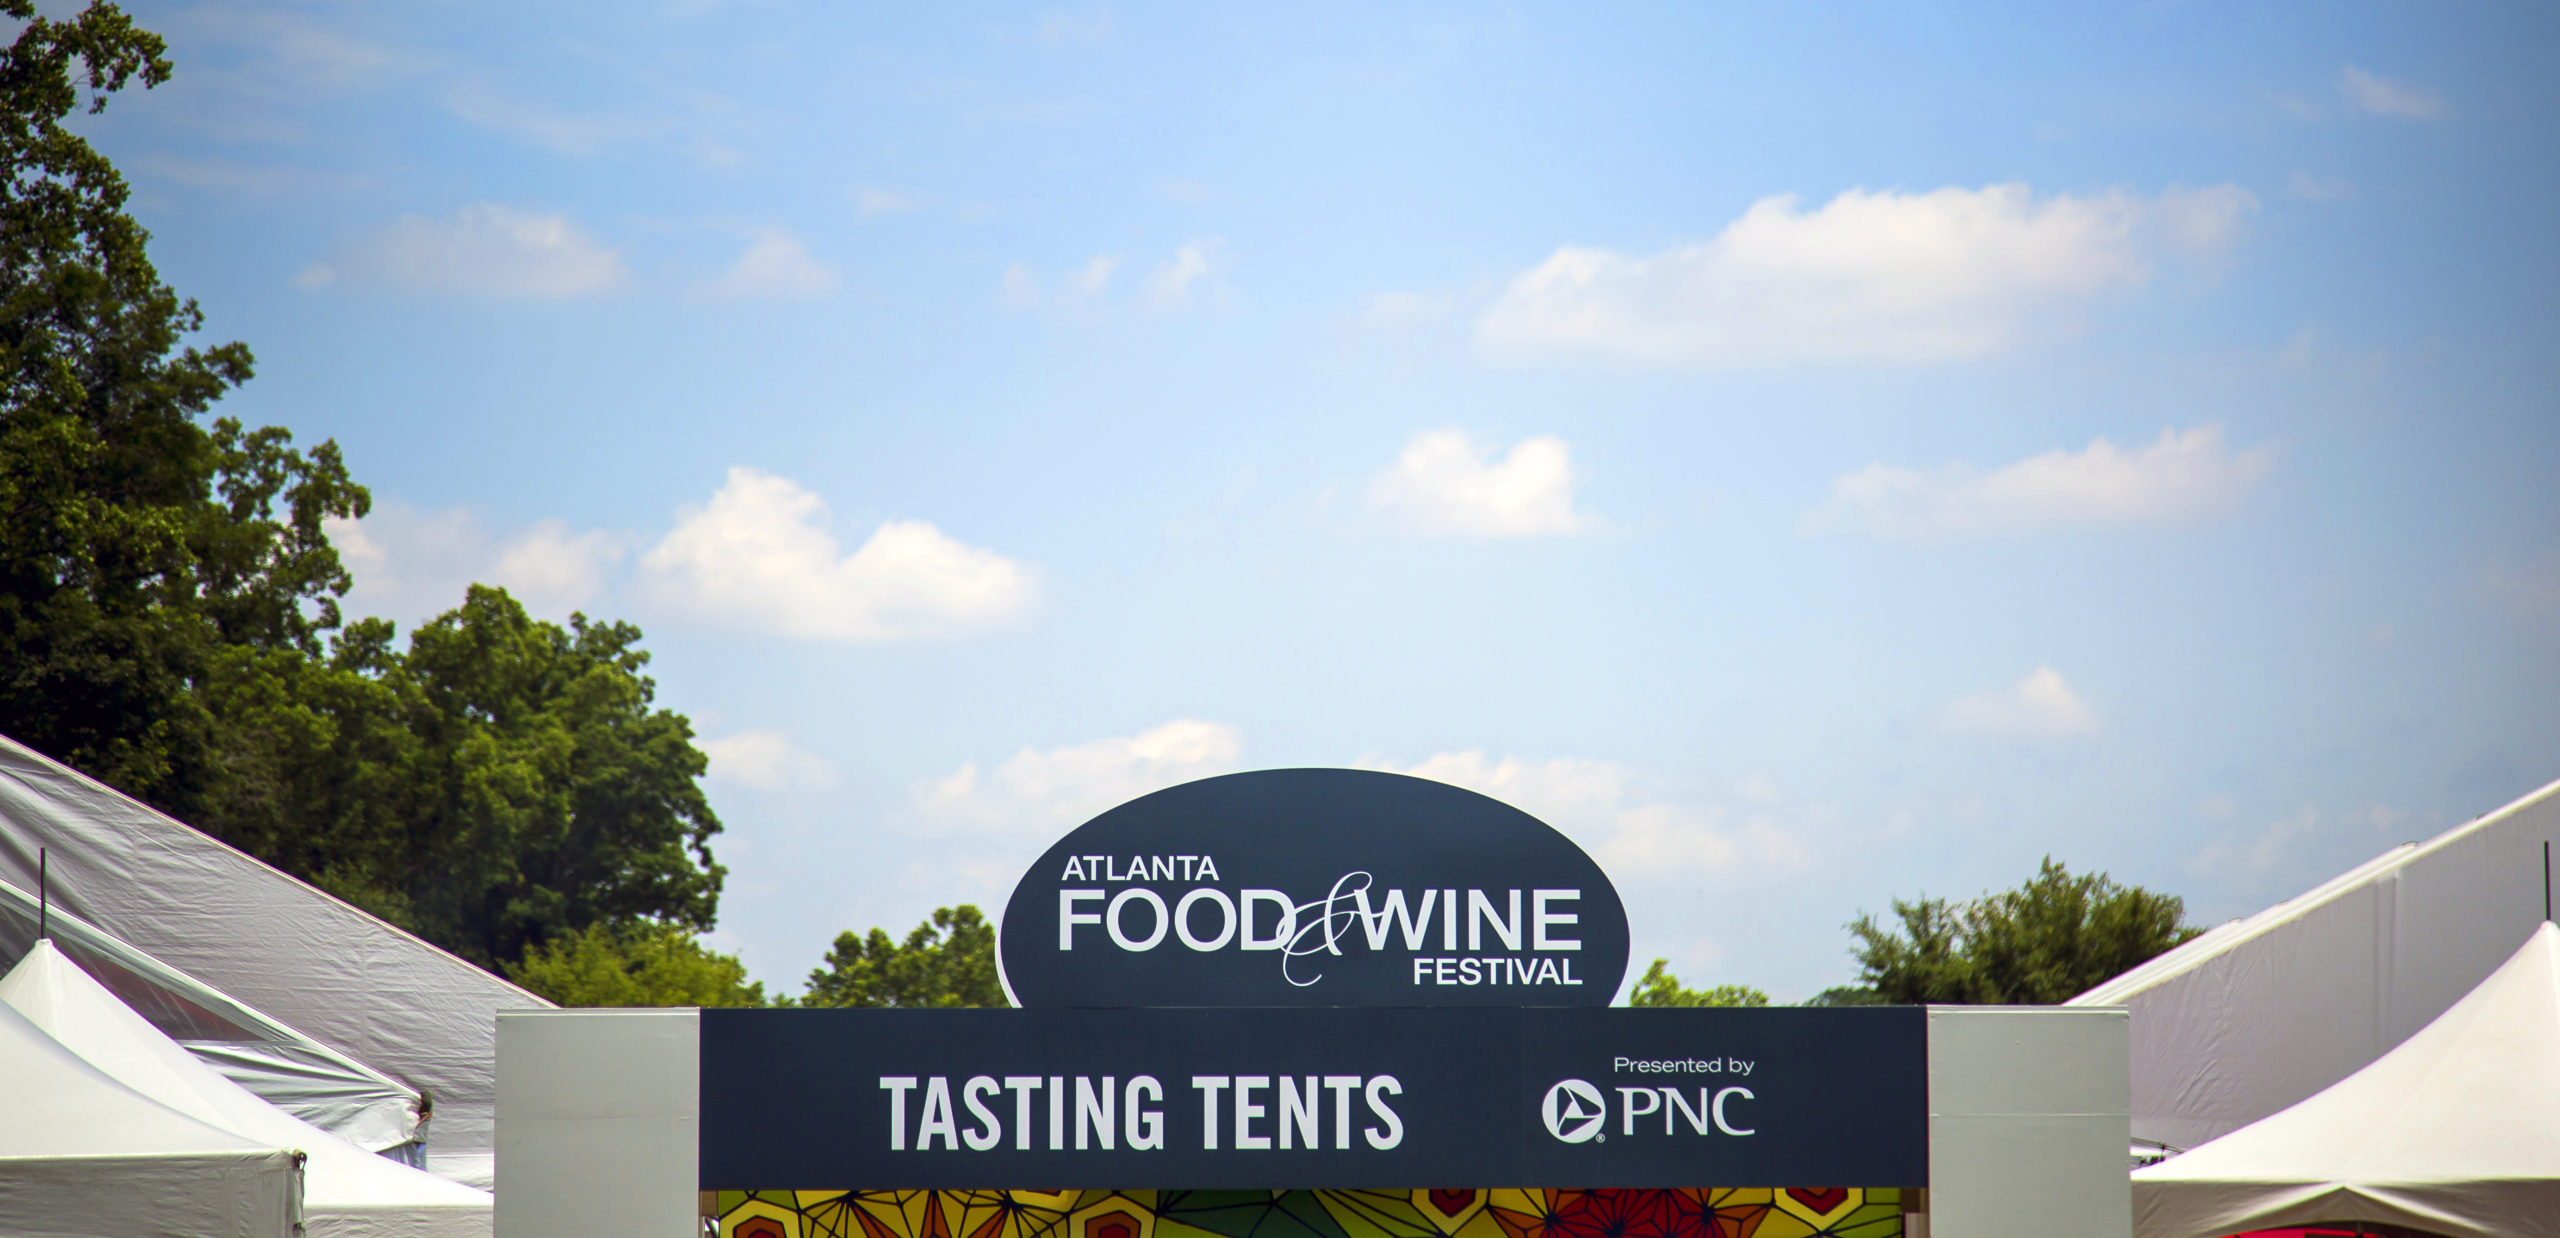 Atlanta Food & Wine Festival is back